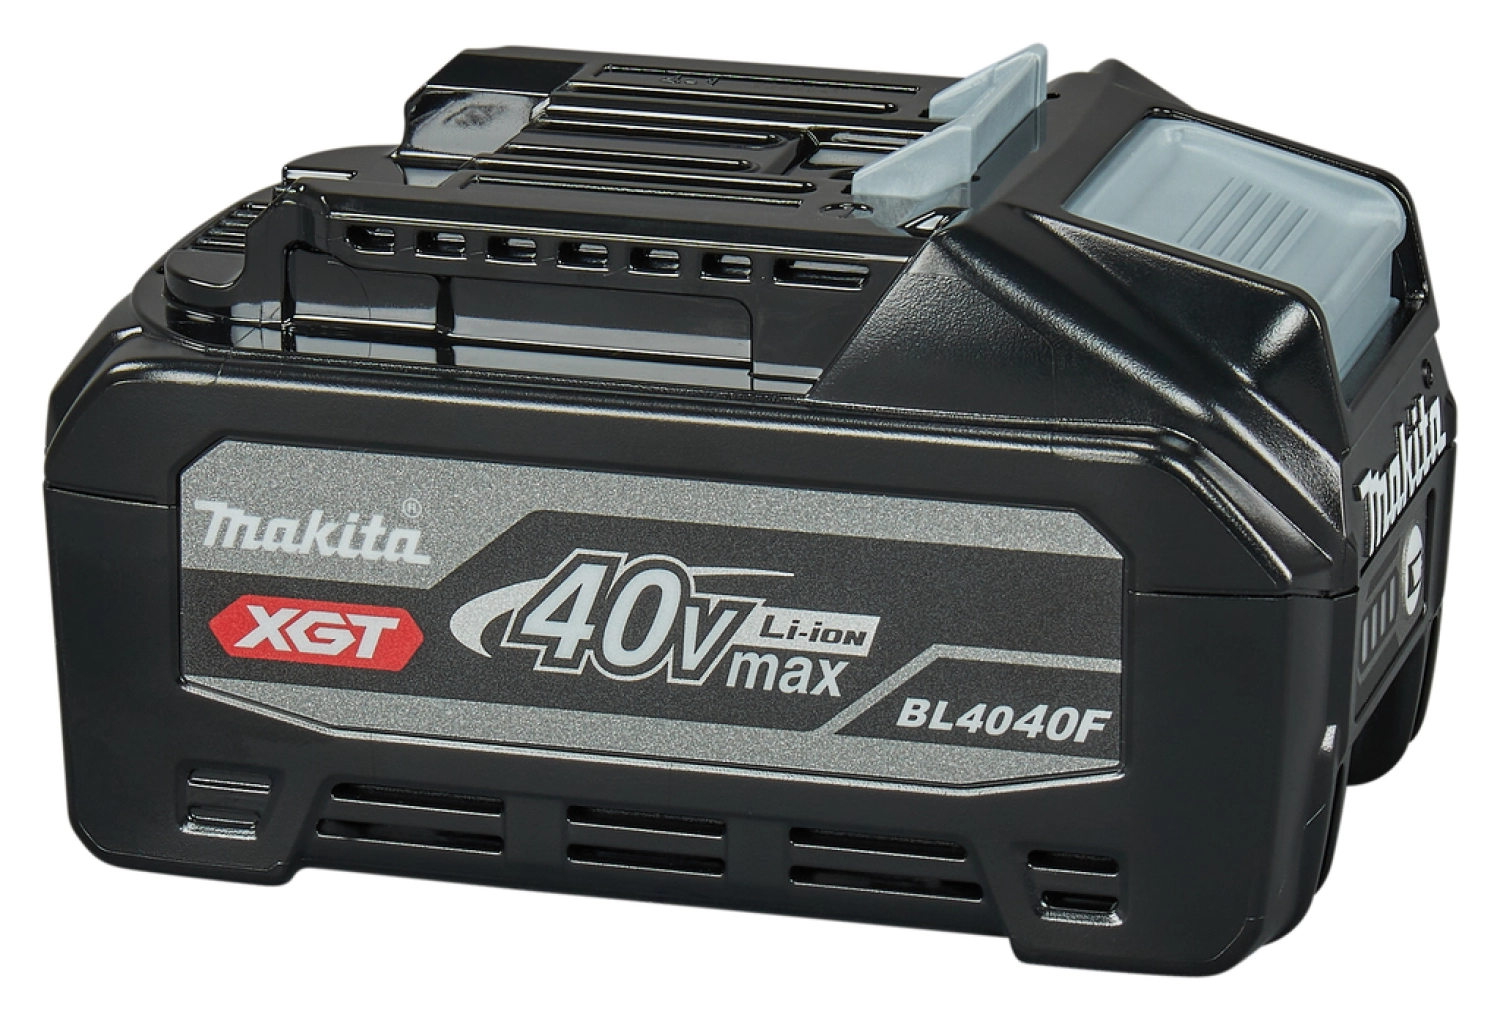 Makita BL4040F 40V XGT Max Li-Ion batterie- 4,0Ah